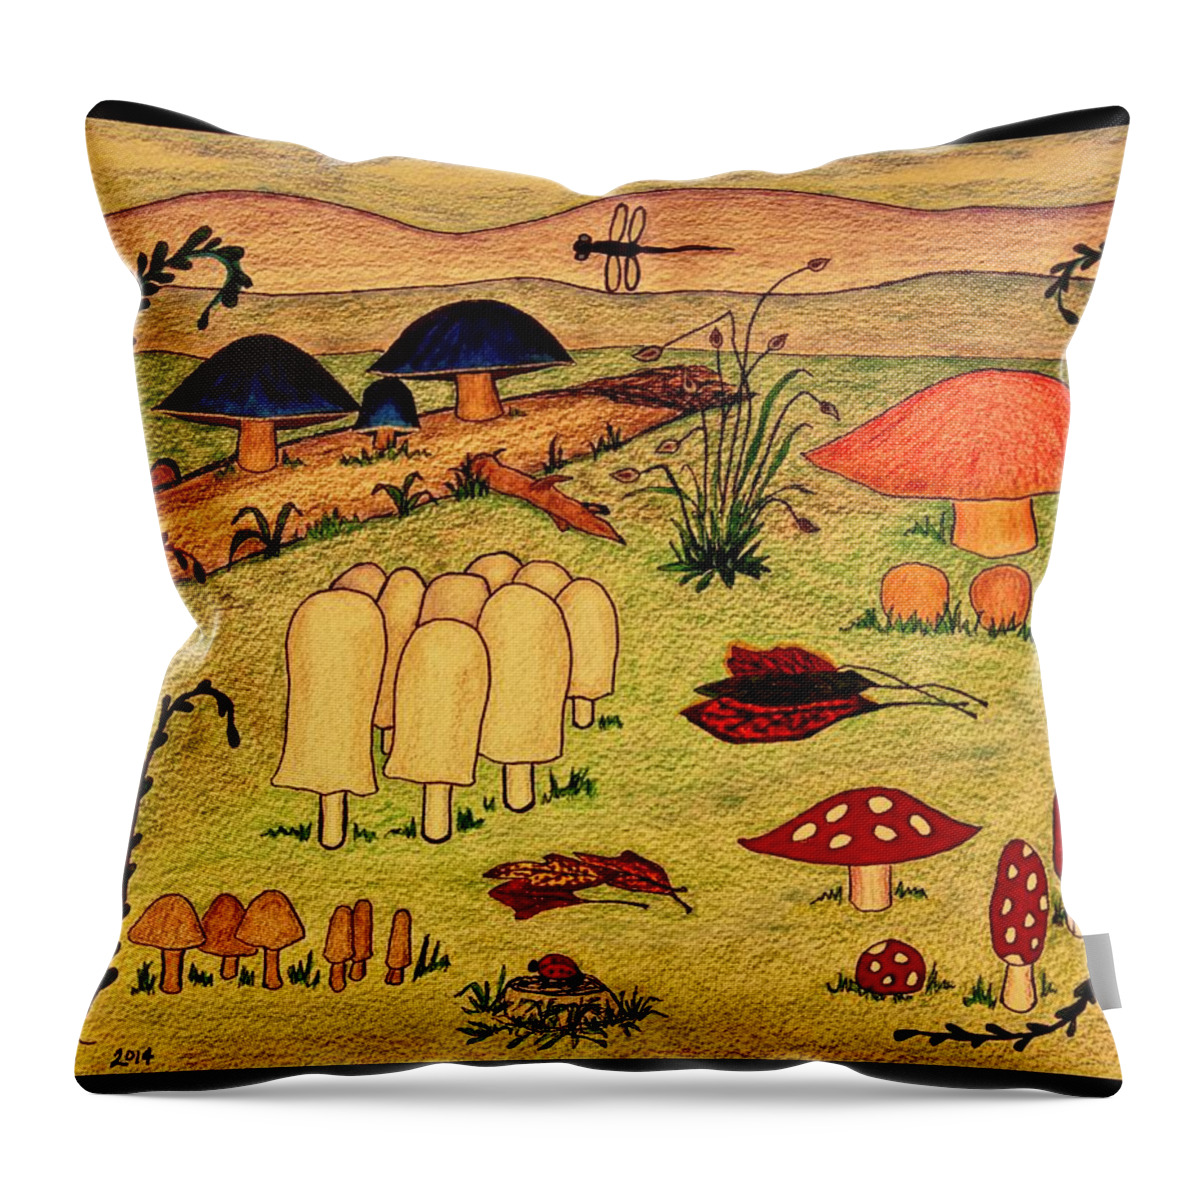 Drawing Throw Pillow featuring the drawing Mushroom Diversity by Karen Nice-Webb